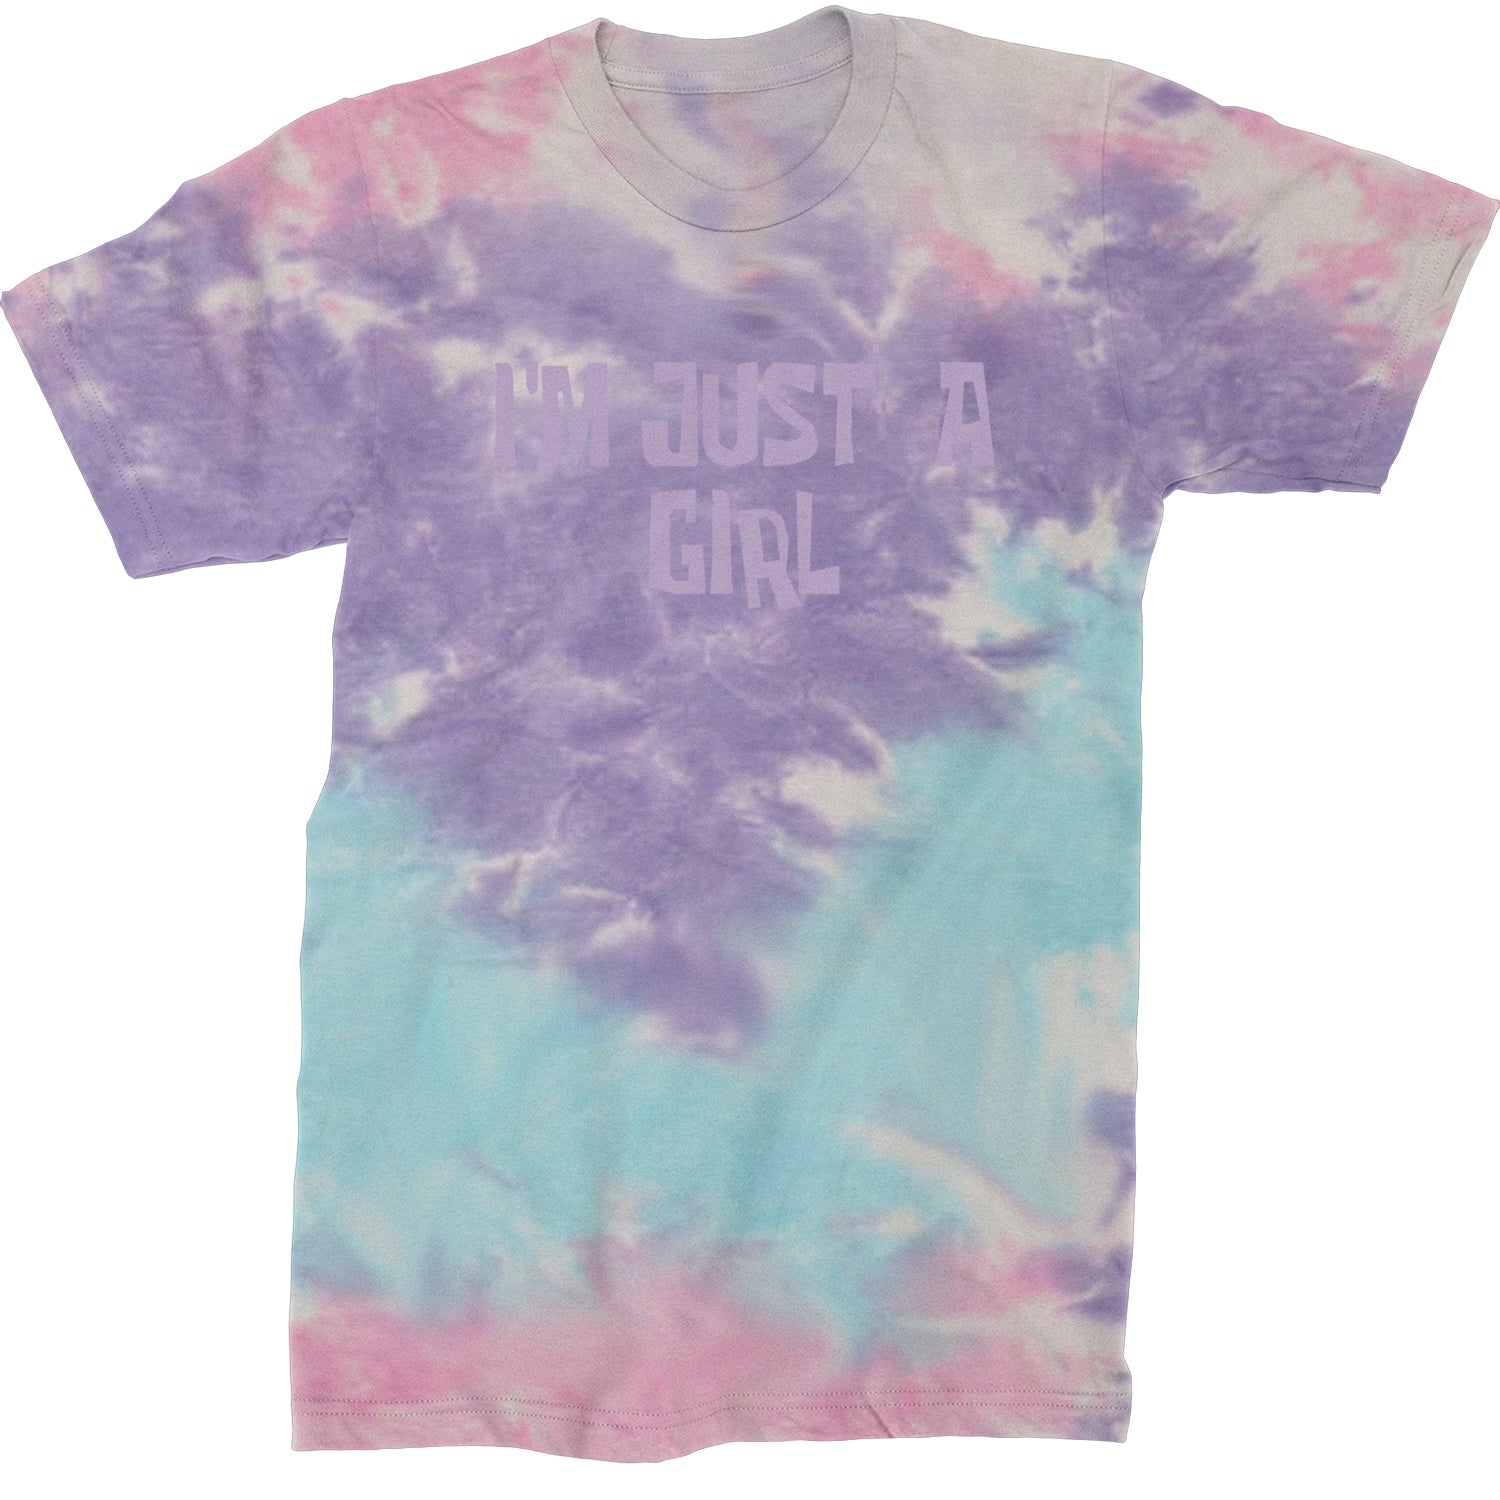 I'm Just A Girl Guts Music Mens T-shirt Tie-Dye Cotton Candy